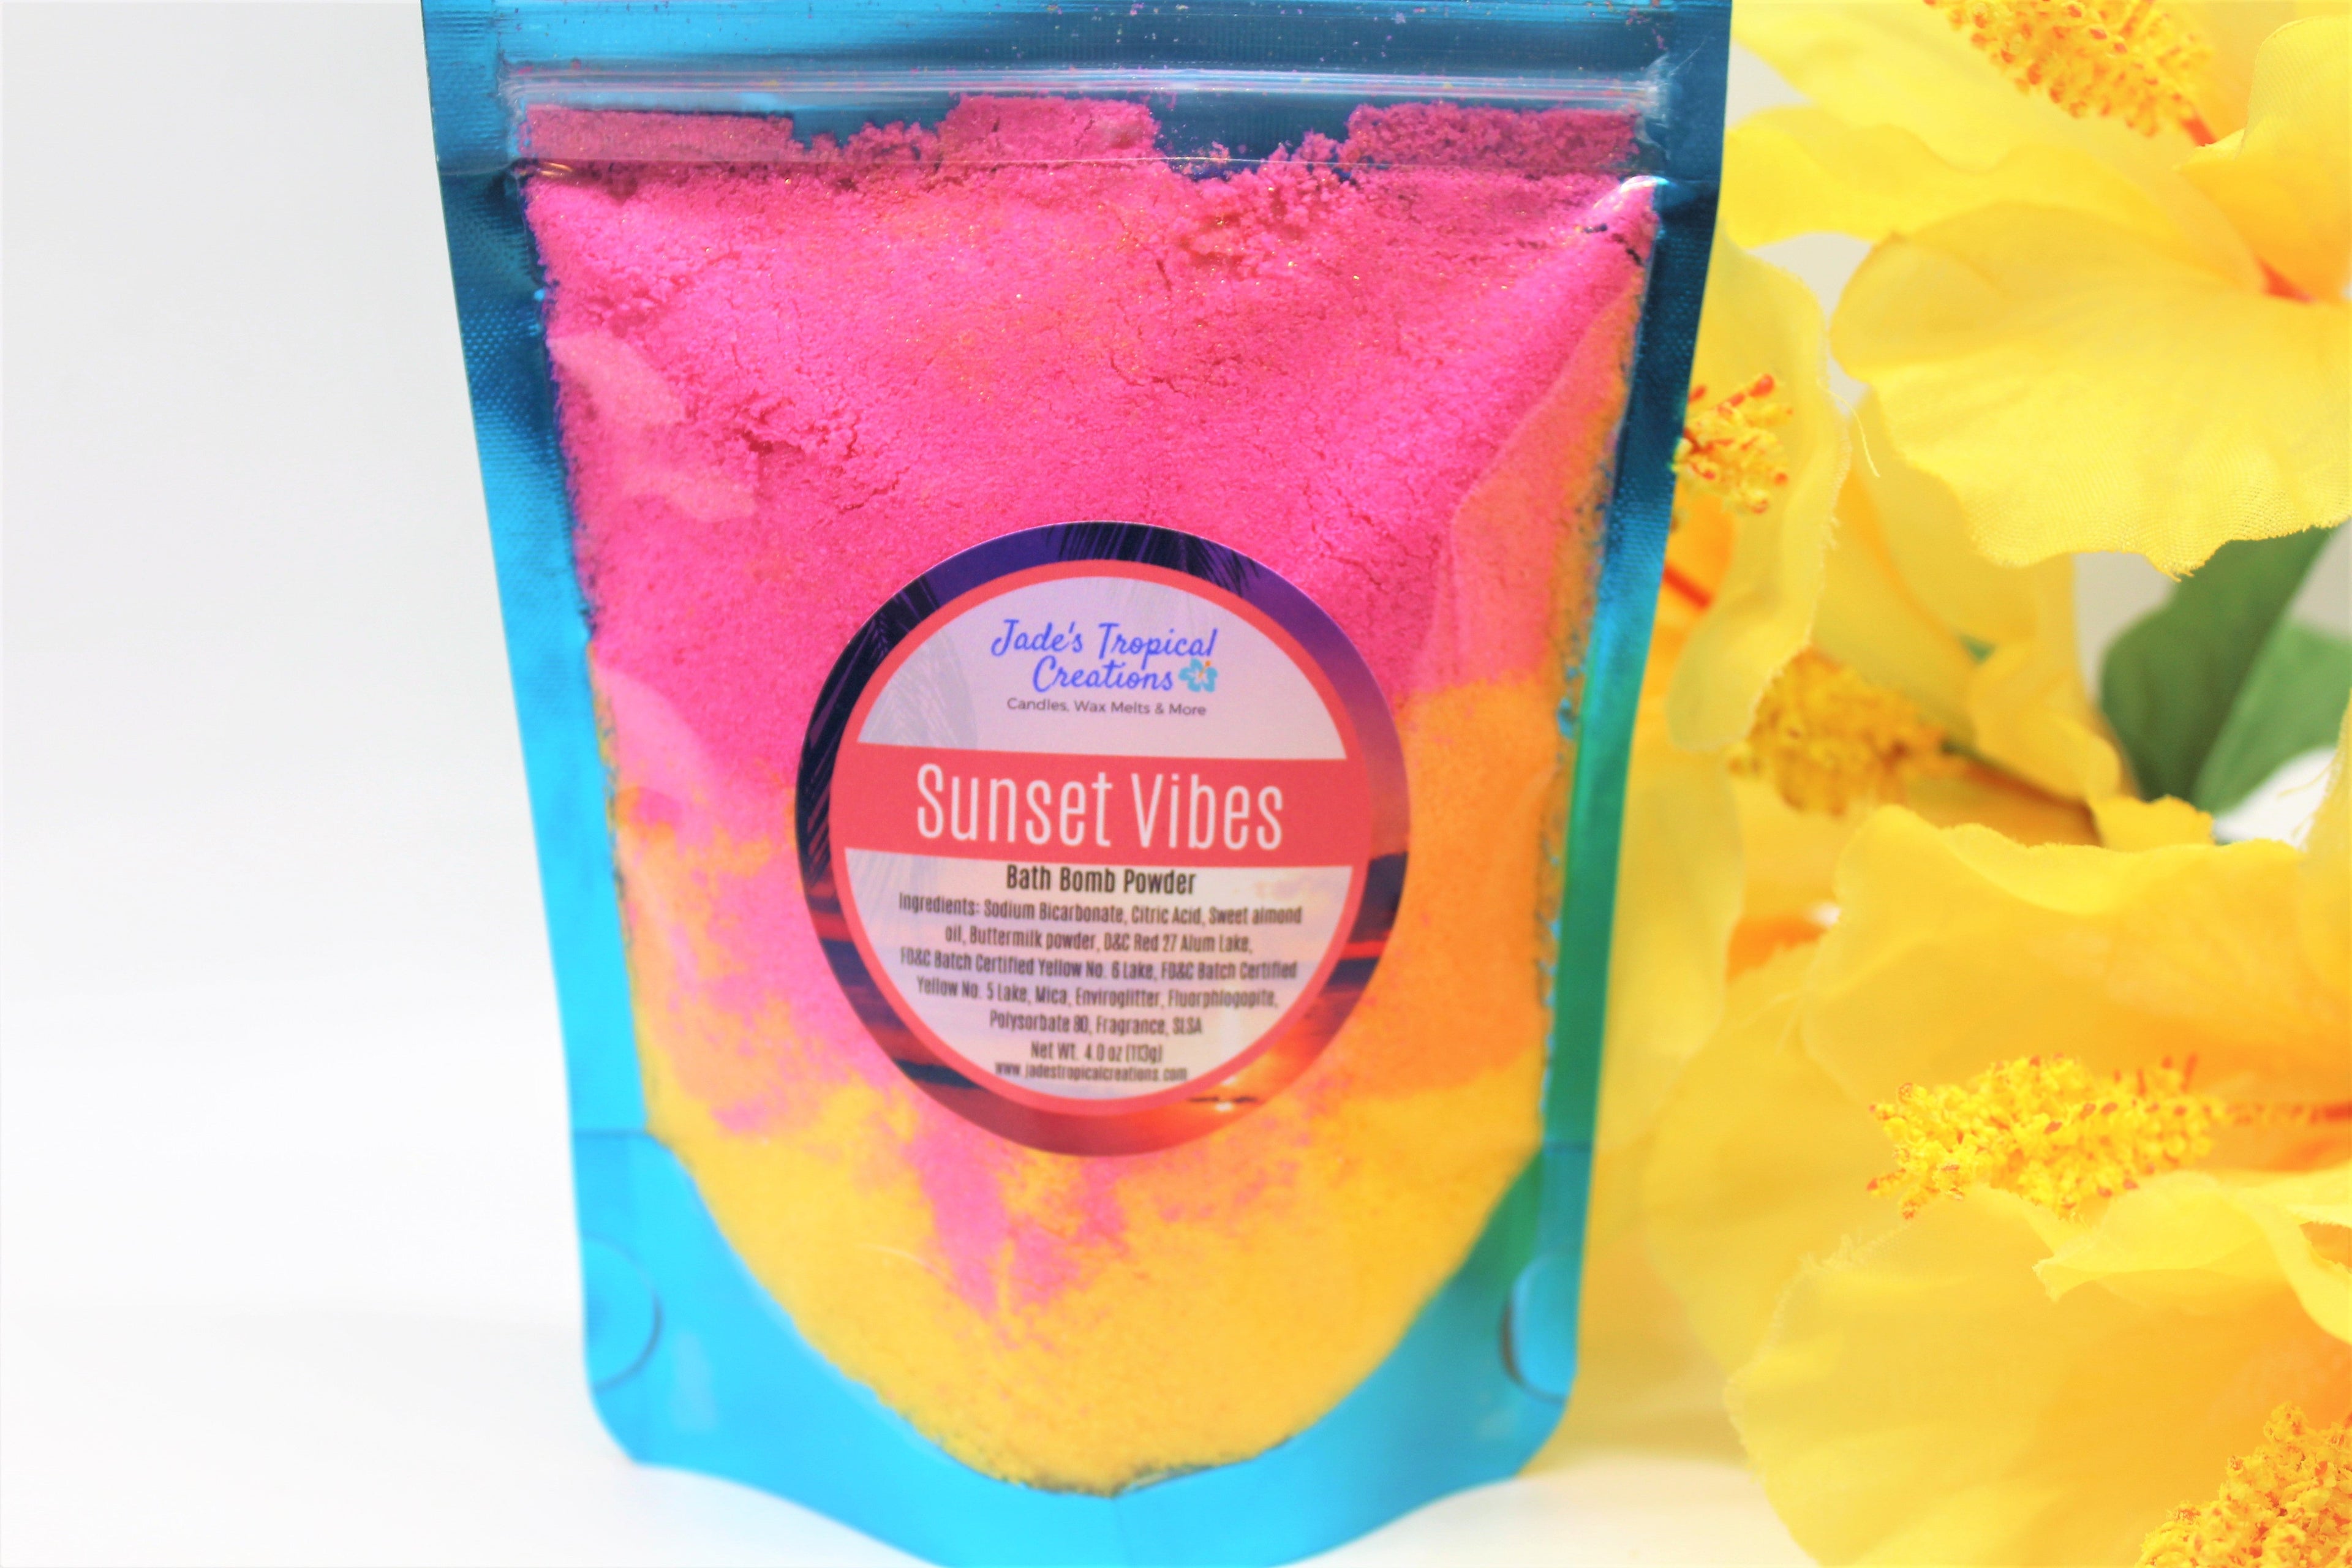 Sunset Vibes Bath Bomb Powder-3